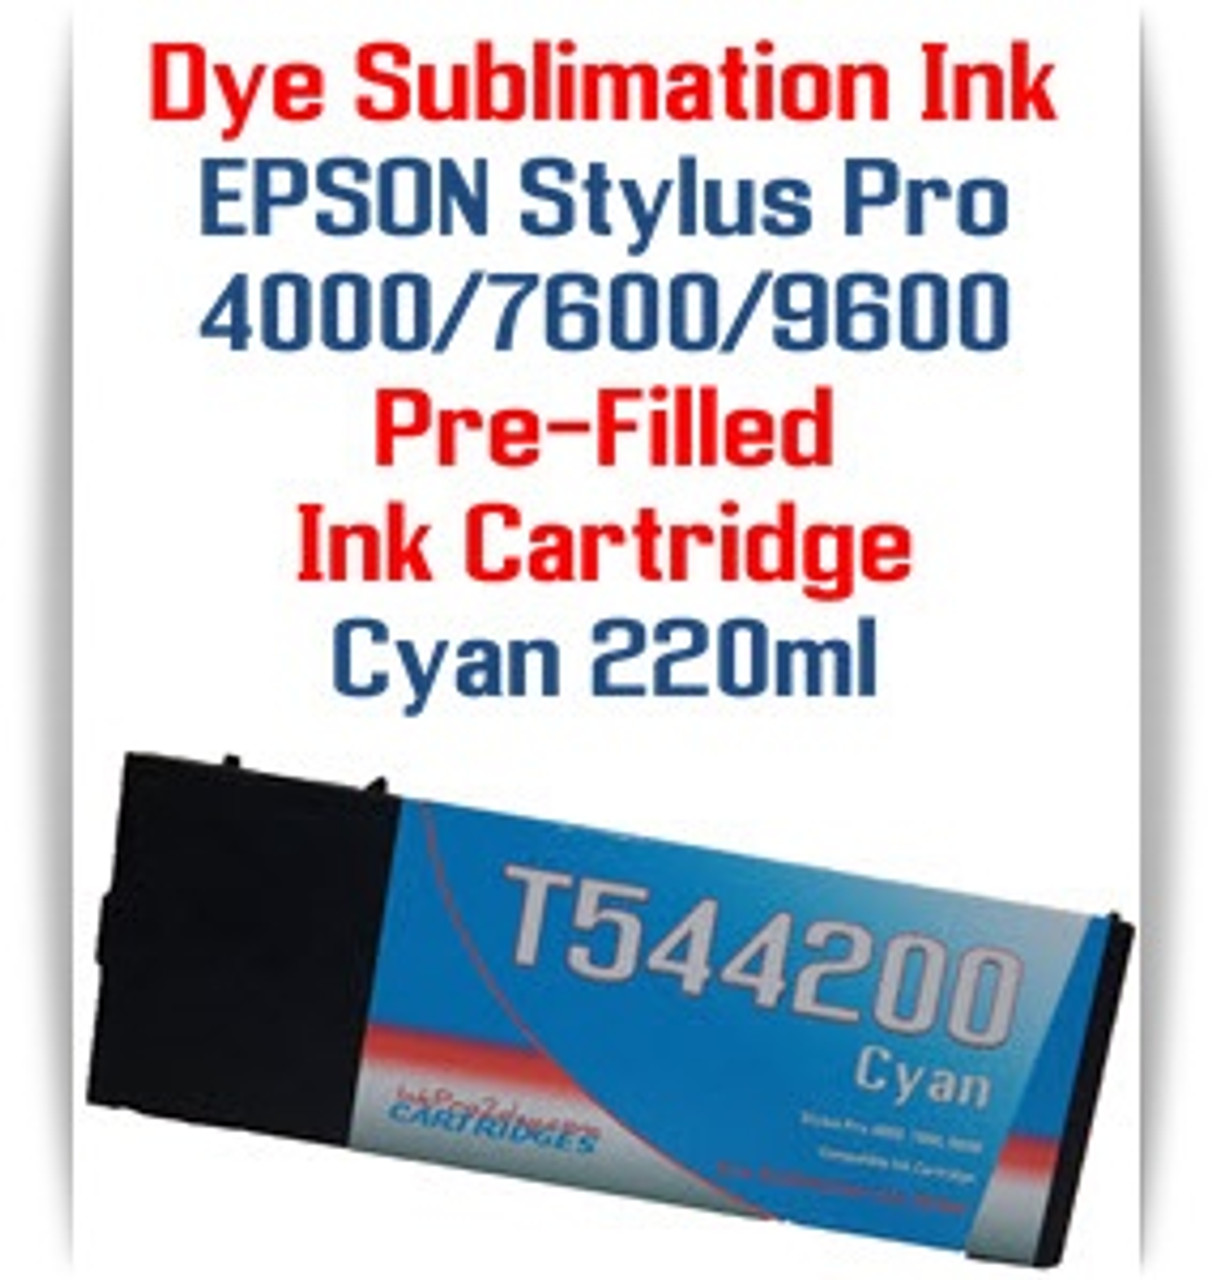 Cyan Epson Stylus Pro 4000, 7600, 9600 printer Dye Sublimation Ink Cartridge 220ml